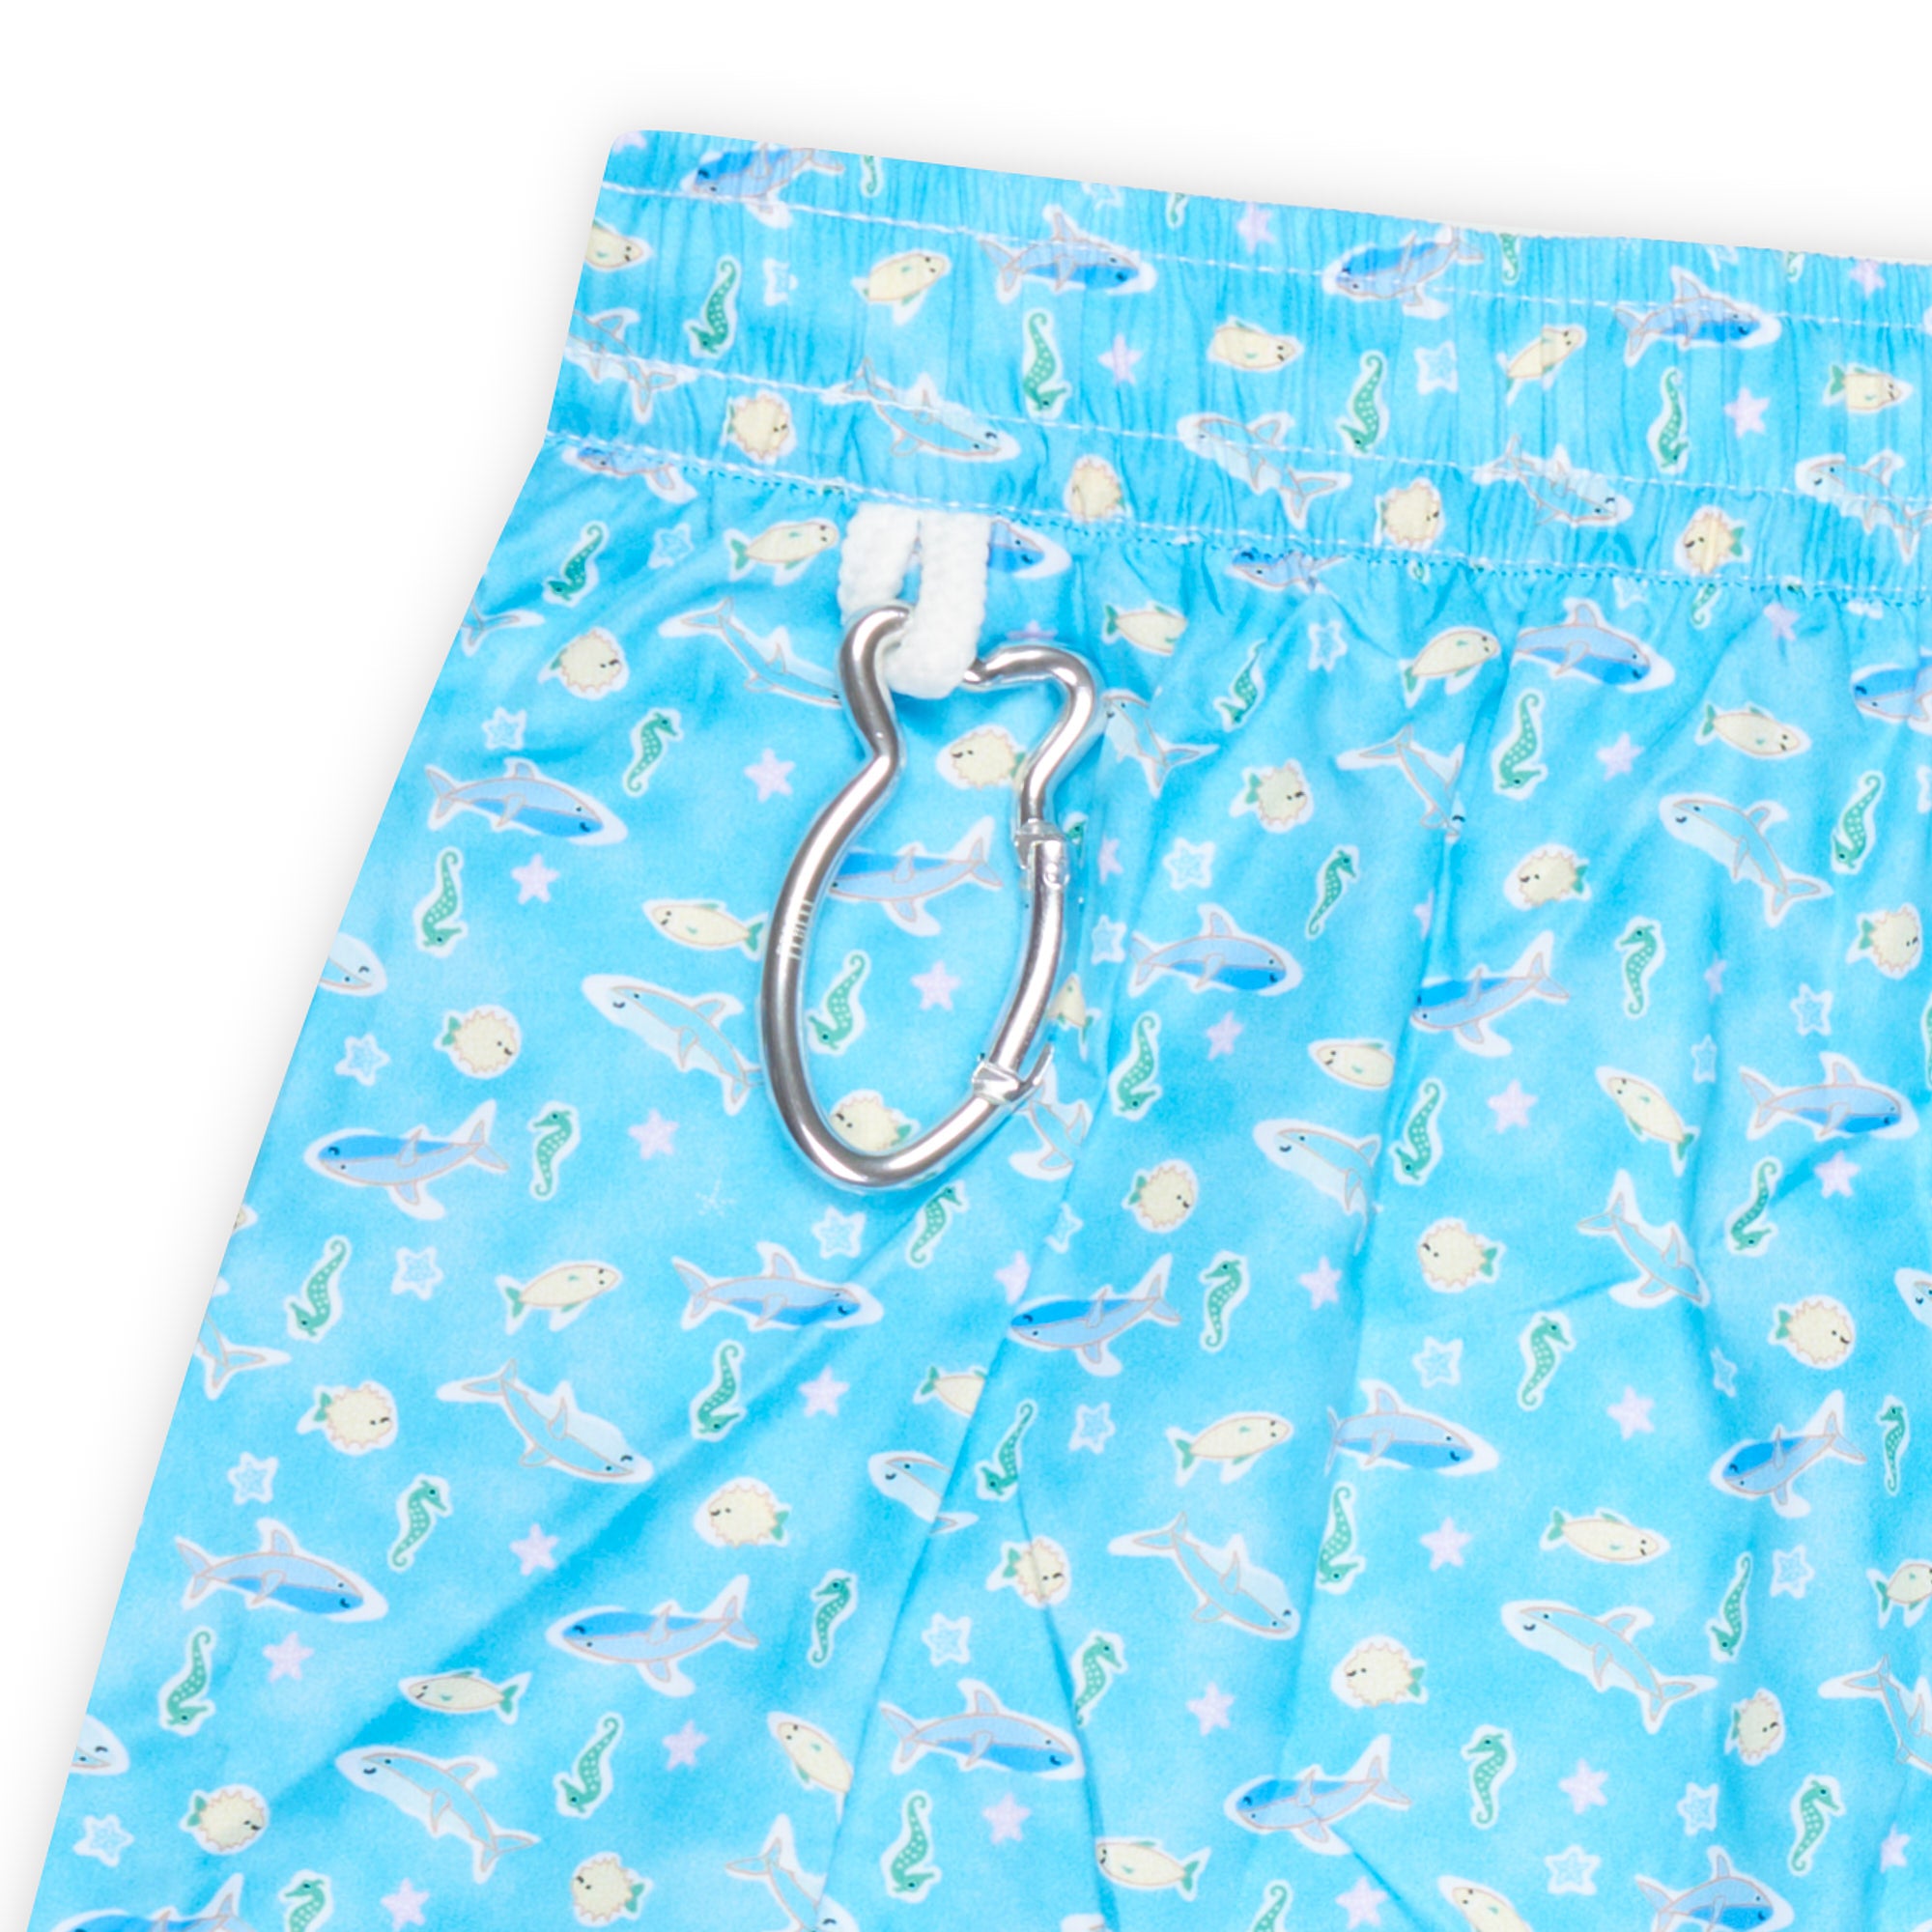 FEDELI Blue Sea Animal Printed Positano Airstop Swim Shorts Trunks NEW Size 3XL FEDELI